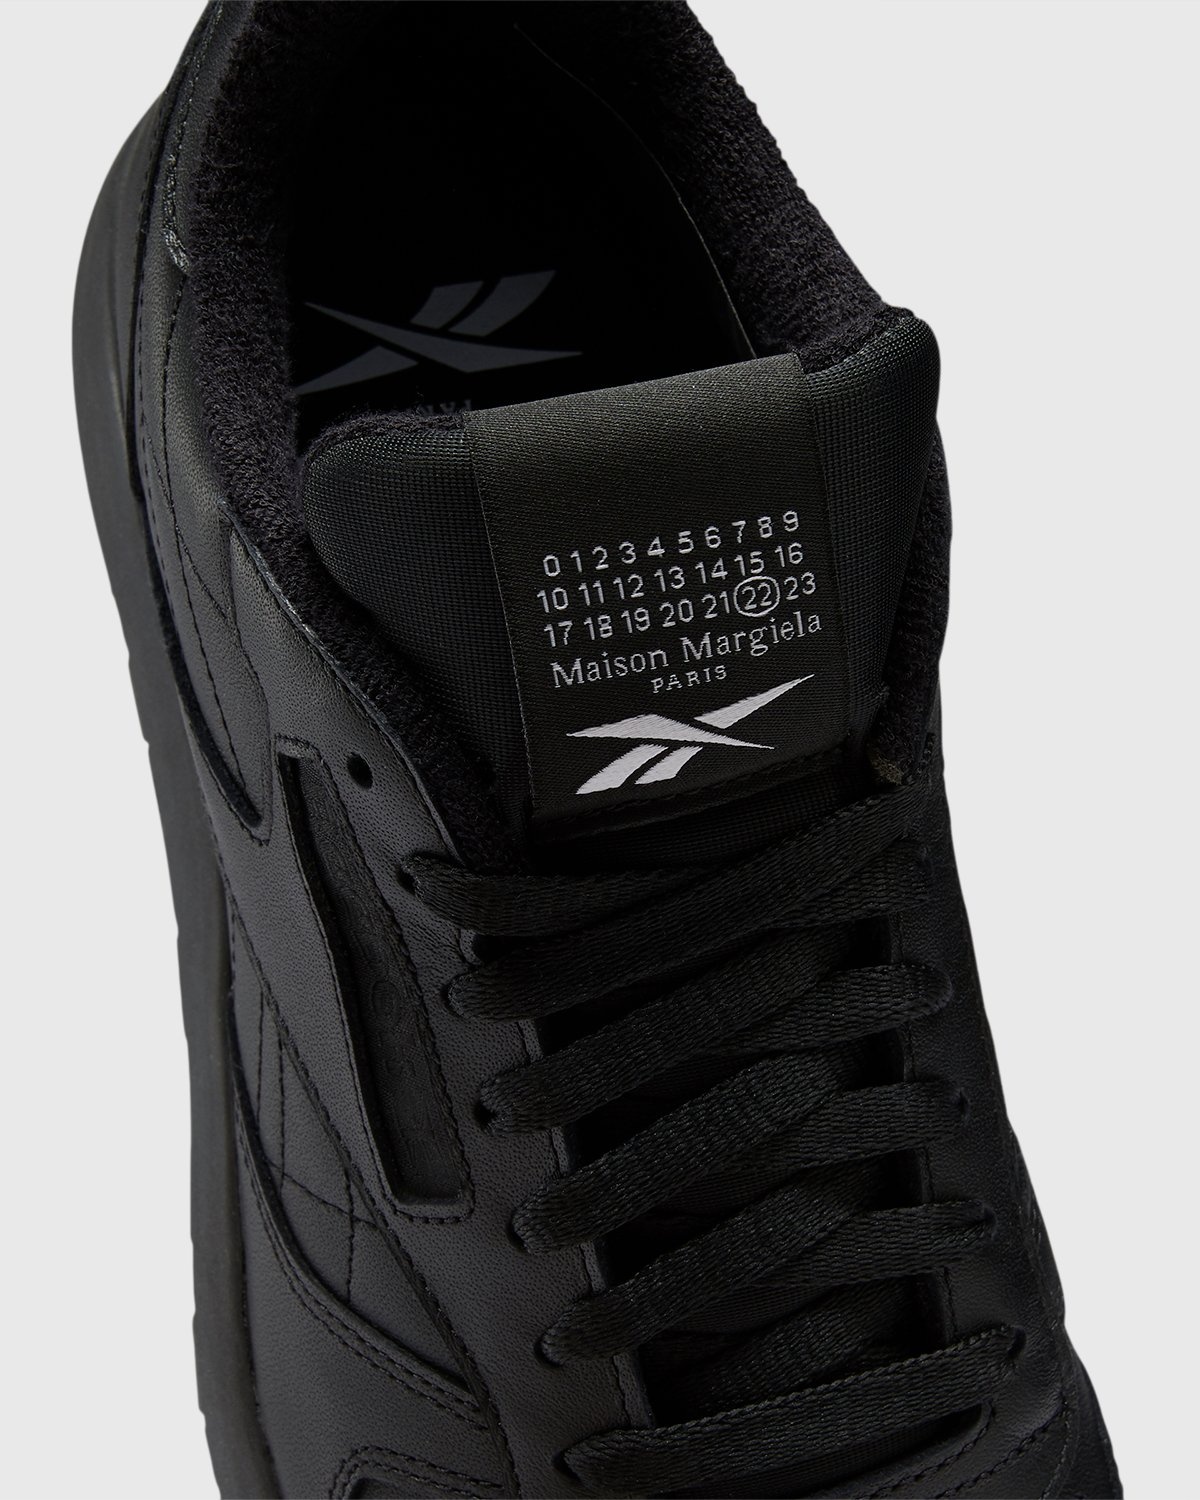 Maison Margiela x Reebok – Classic Leather Tabi Black - Low Top Sneakers - Black - Image 5